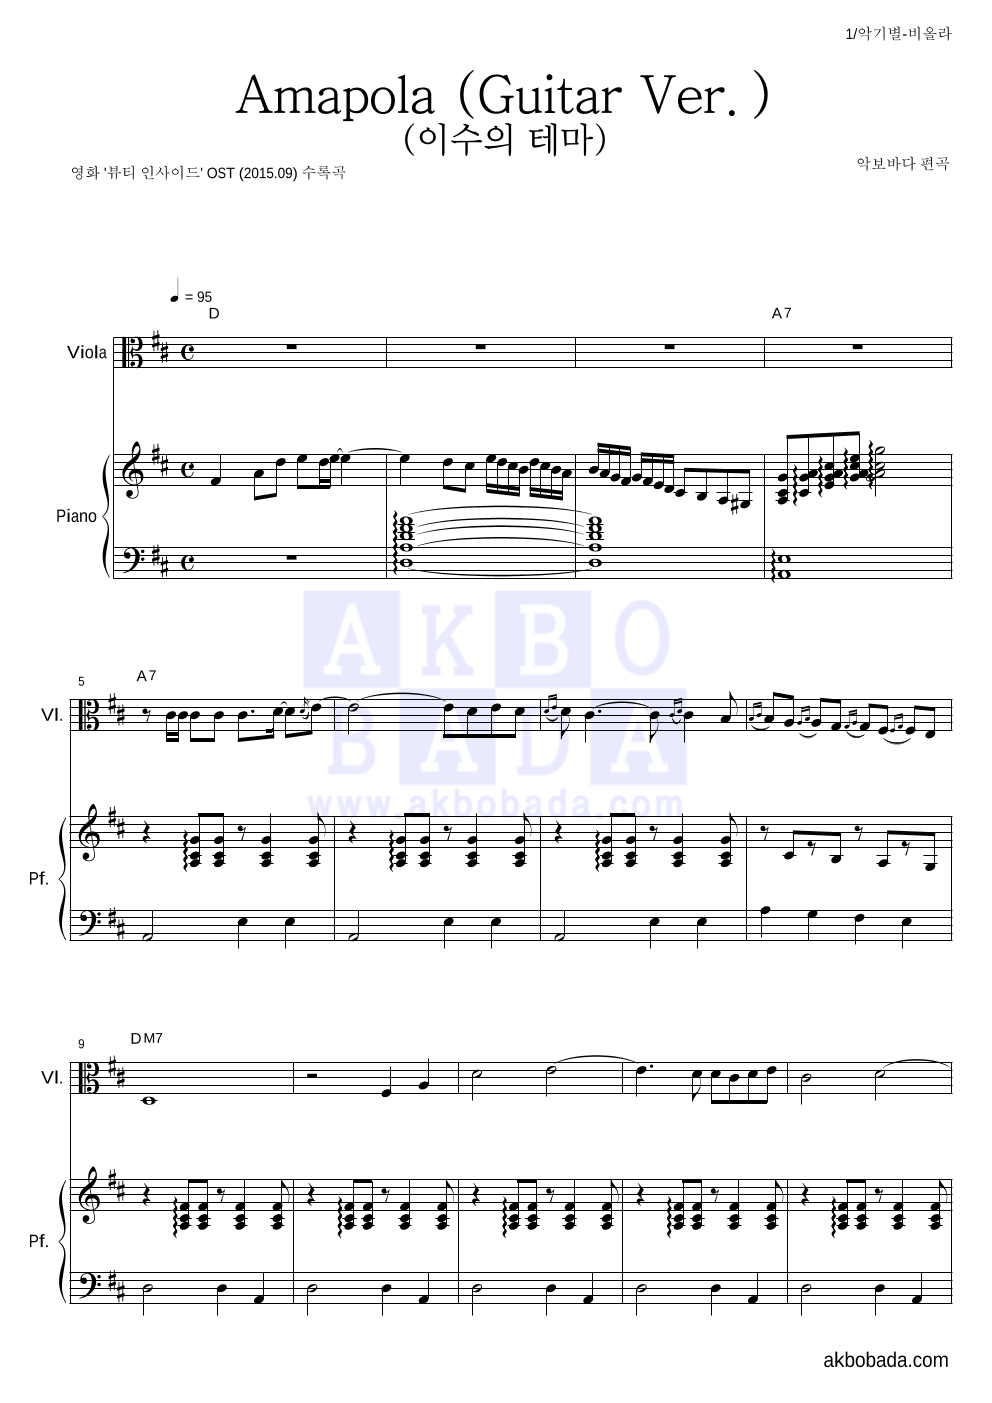 The Soundtrack Kings - Amapola (Guitar Ver.) (이수의 테마) 비올라&피아노 악보 